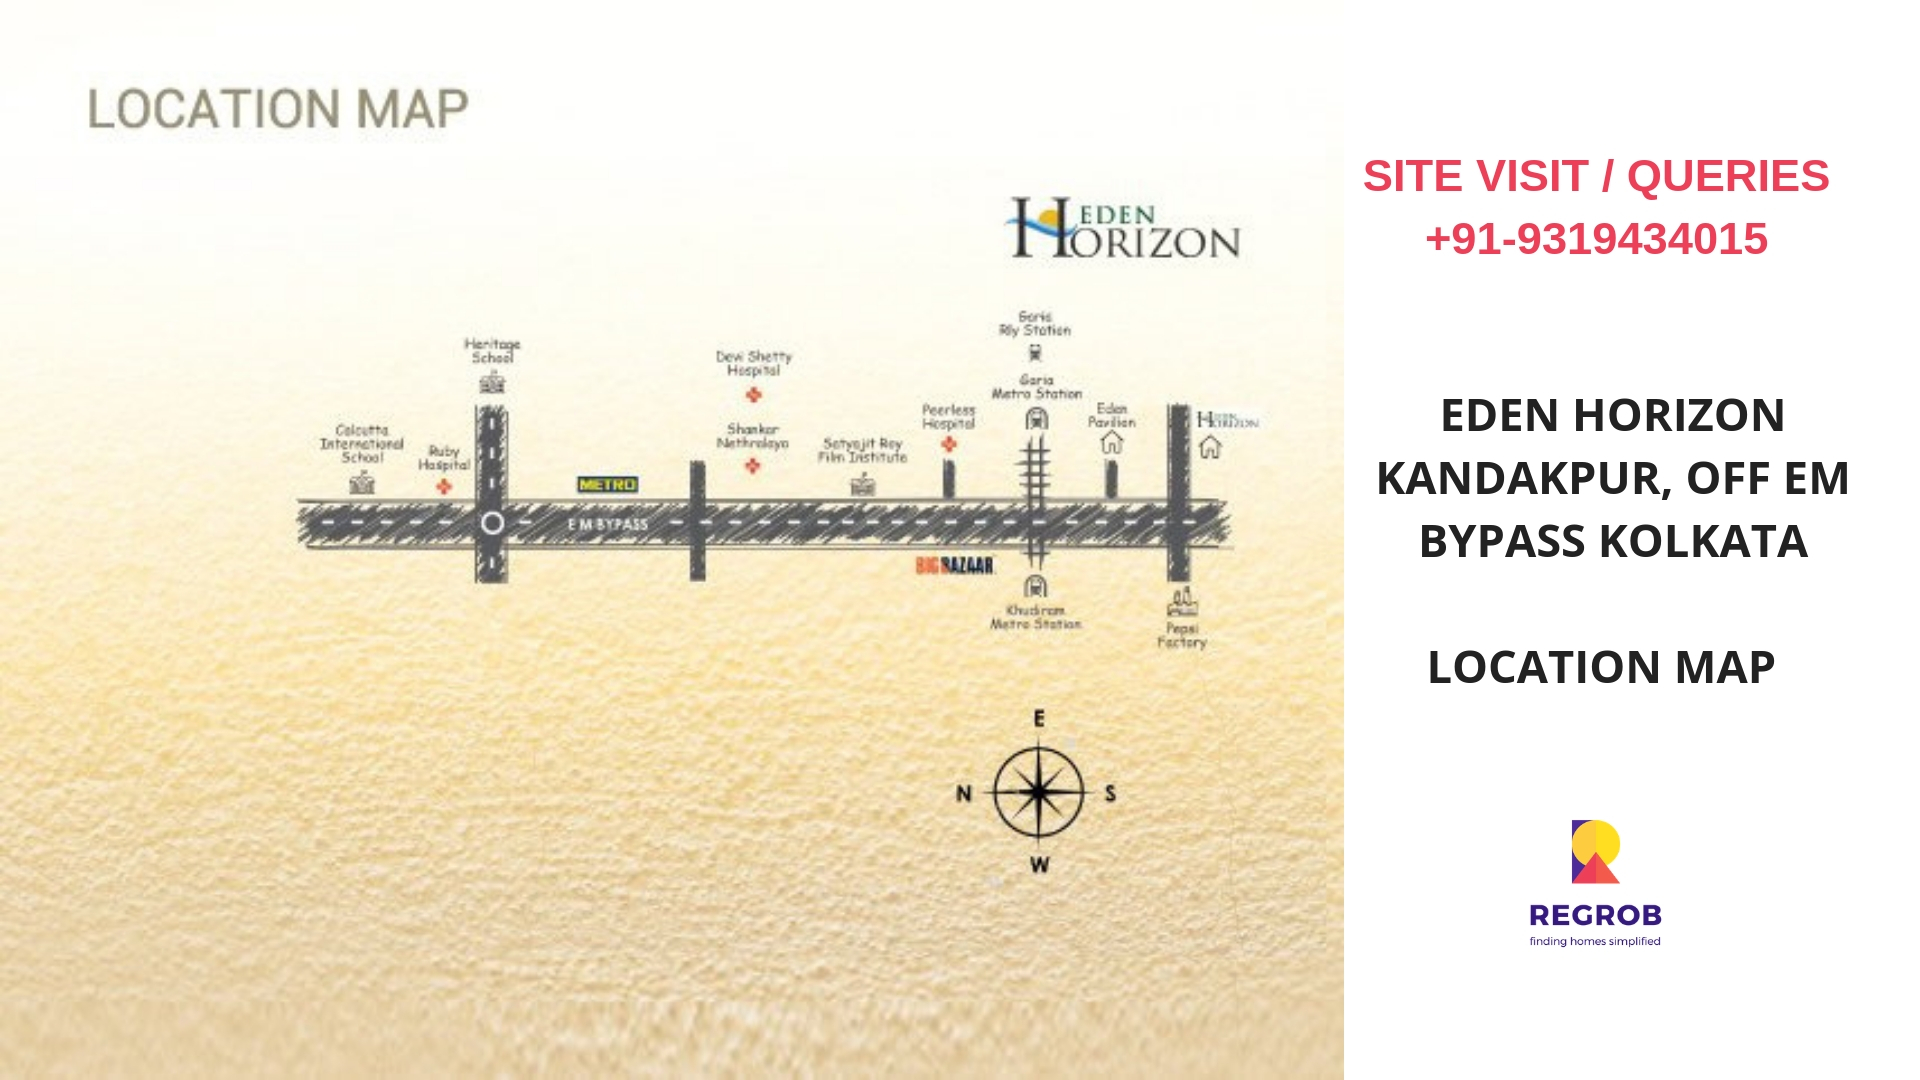 Eden Horizon Off EM Bypass Kolkata